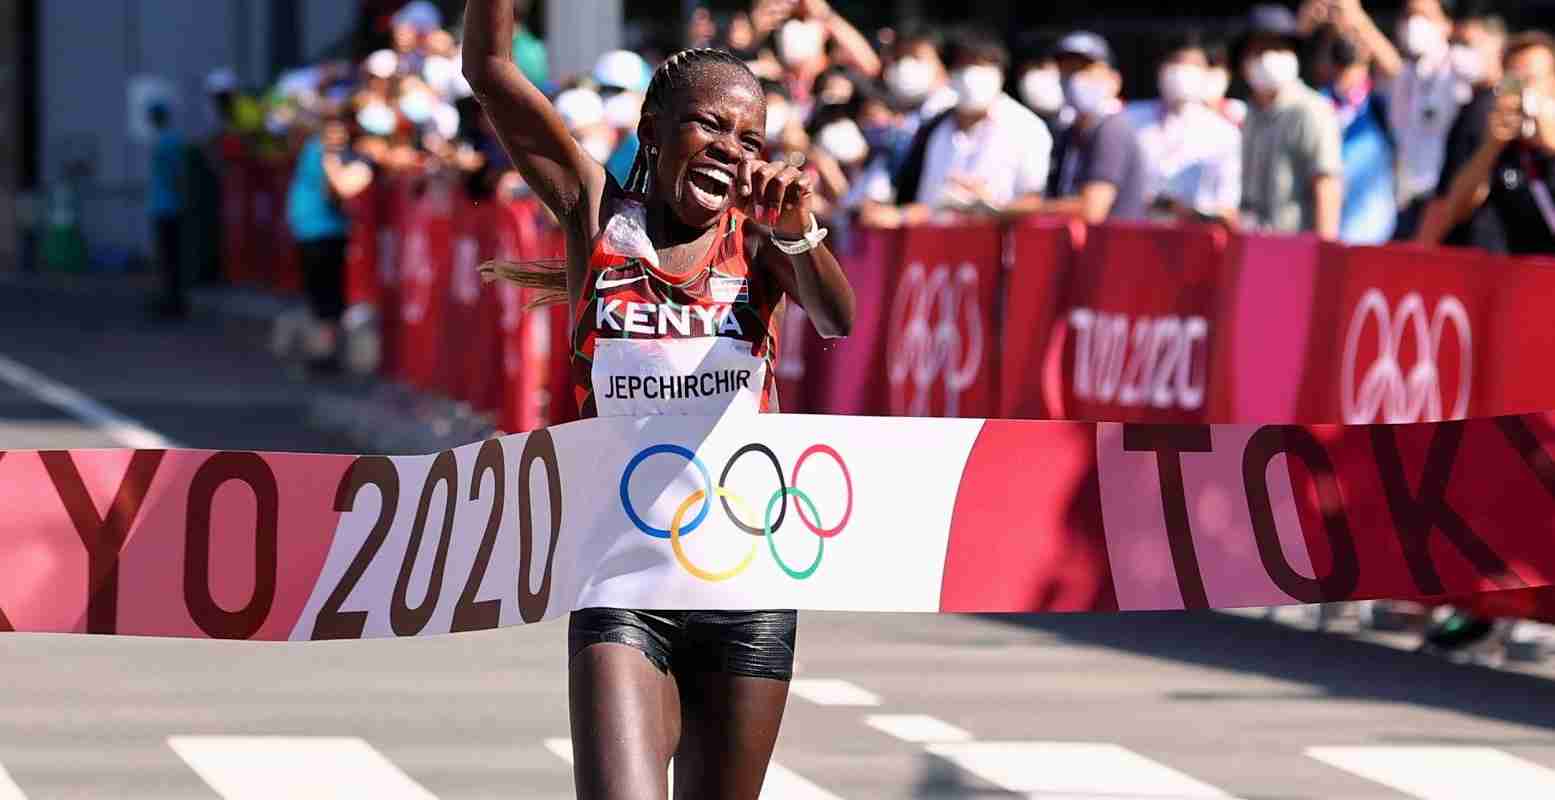 Peres Jepchirchir of Kenya wins Tokyo Olympic marathon gold